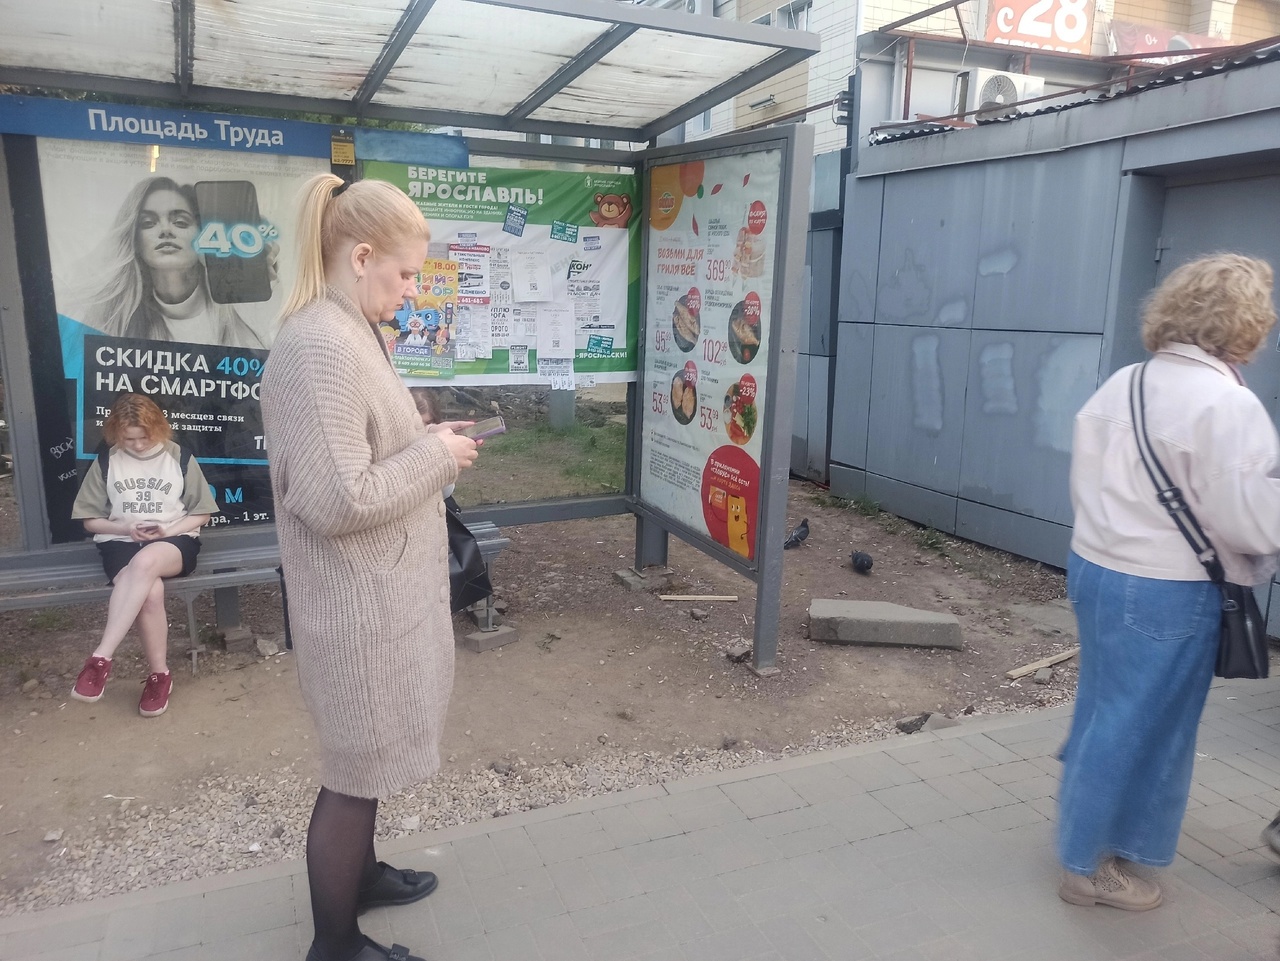 Ярославцы пожаловались на работу 22 автобуса